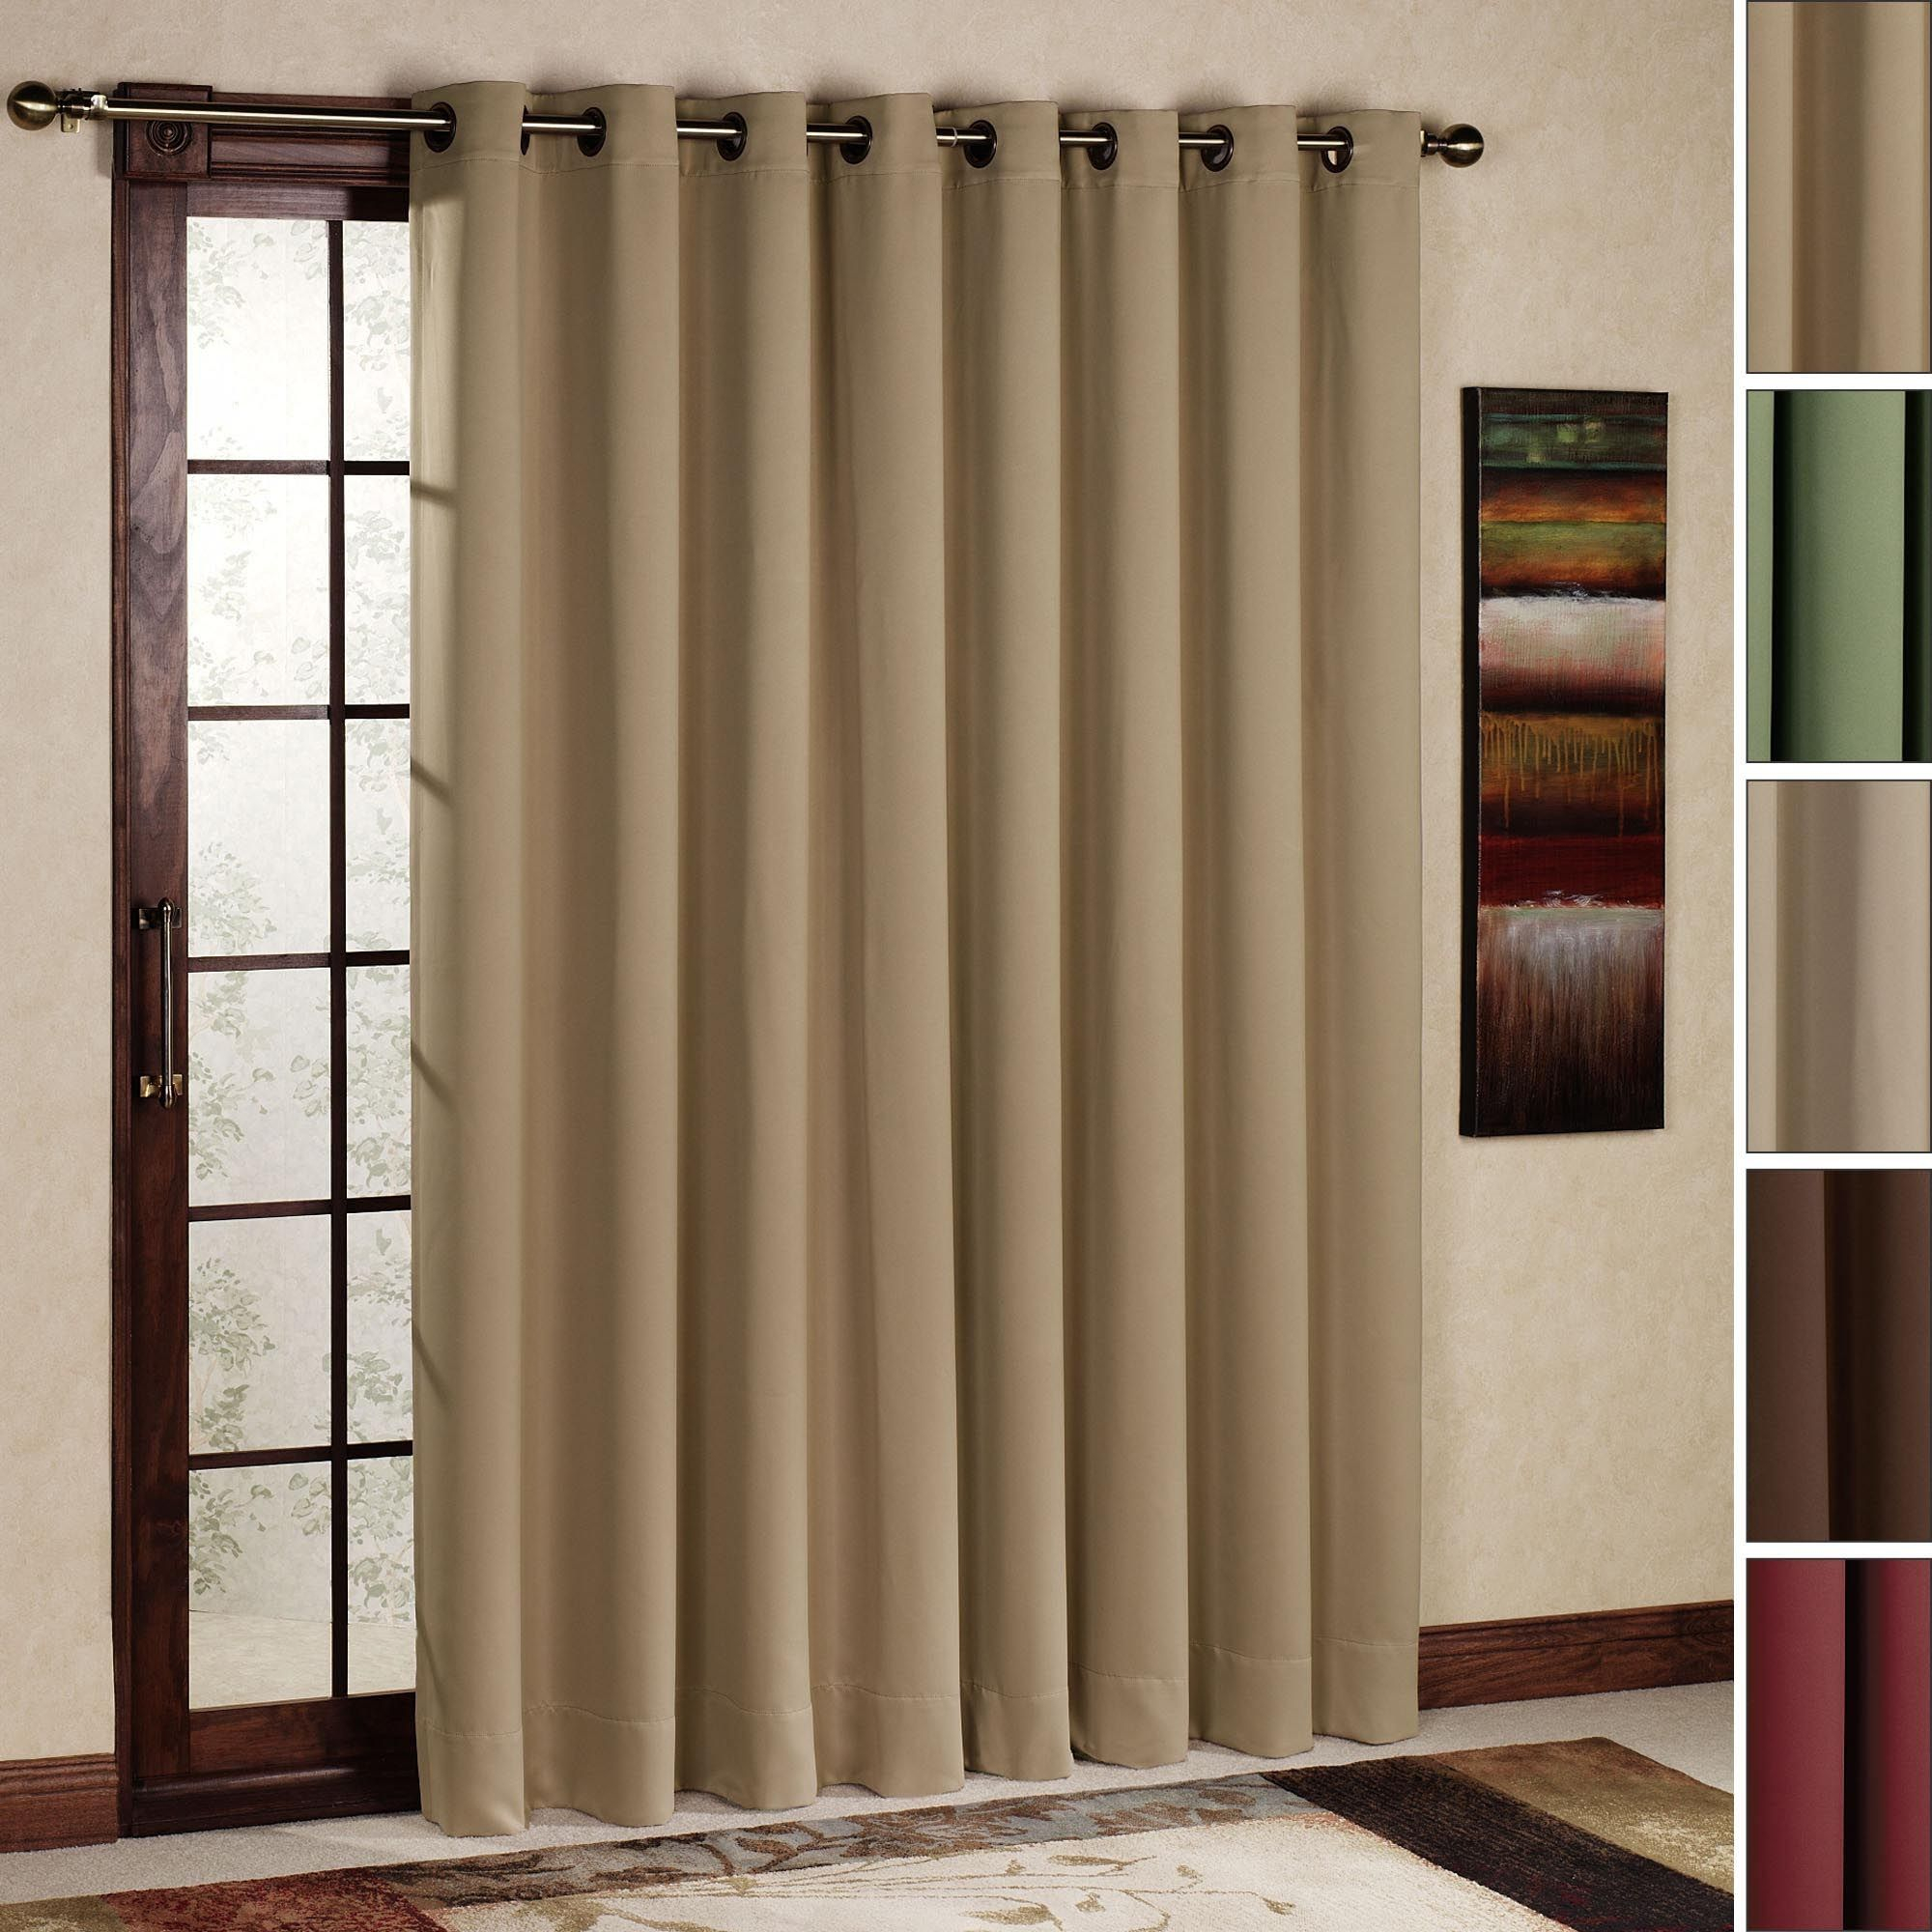 Curtain Rod Size For Sliding Glass Door Window Treatments Design inside measurements 2000 X 2000